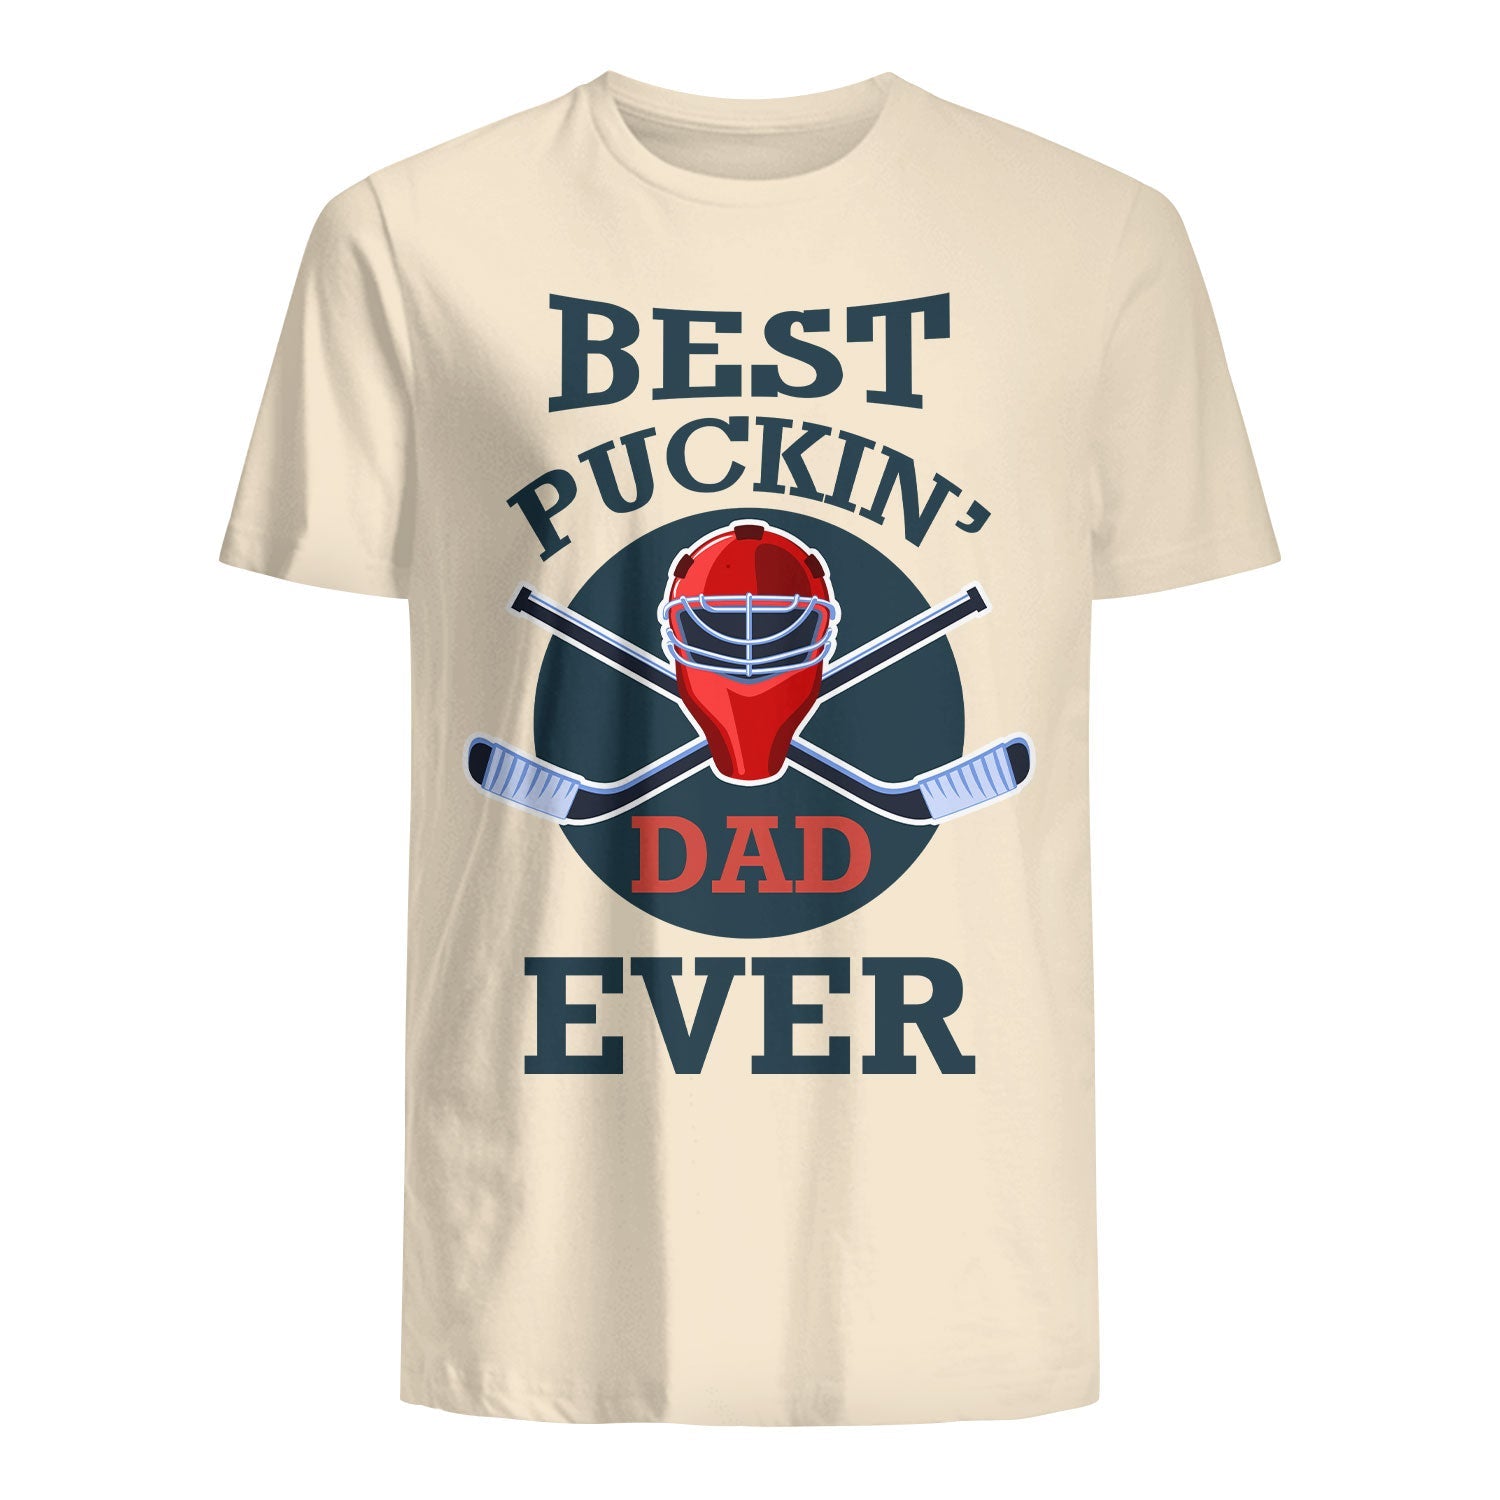 T-shirt for Dad - Best Buckin' Dad Ever